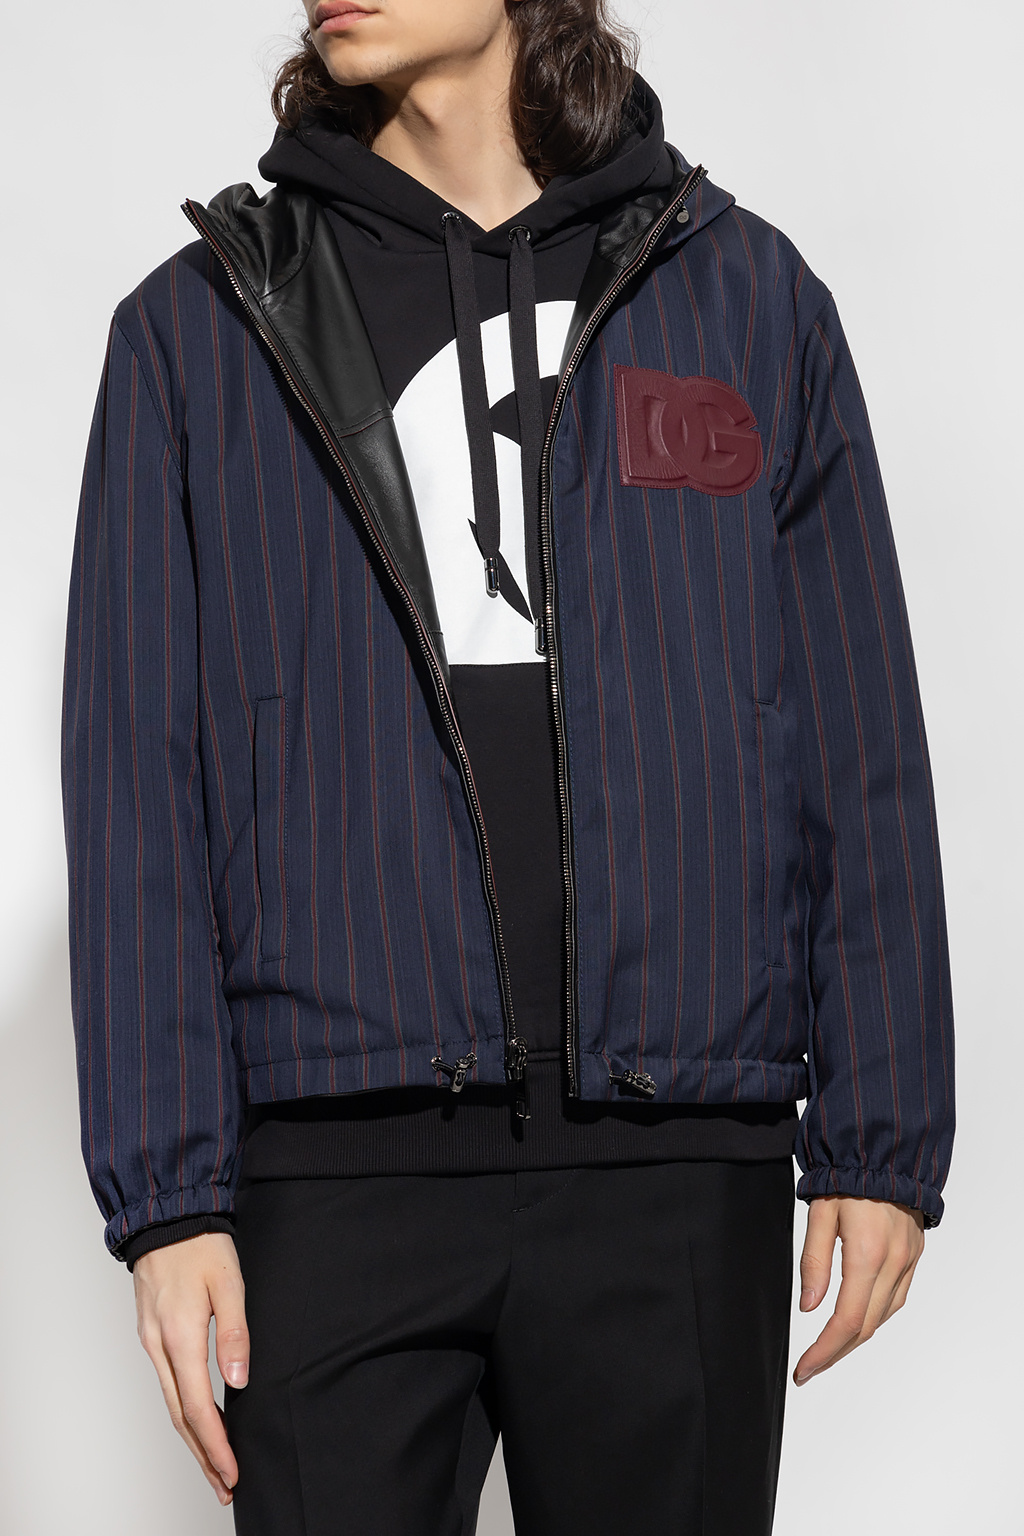 Louis Vuitton Reversible Pinstripe Nylon Hooded Jacket White. Size 34